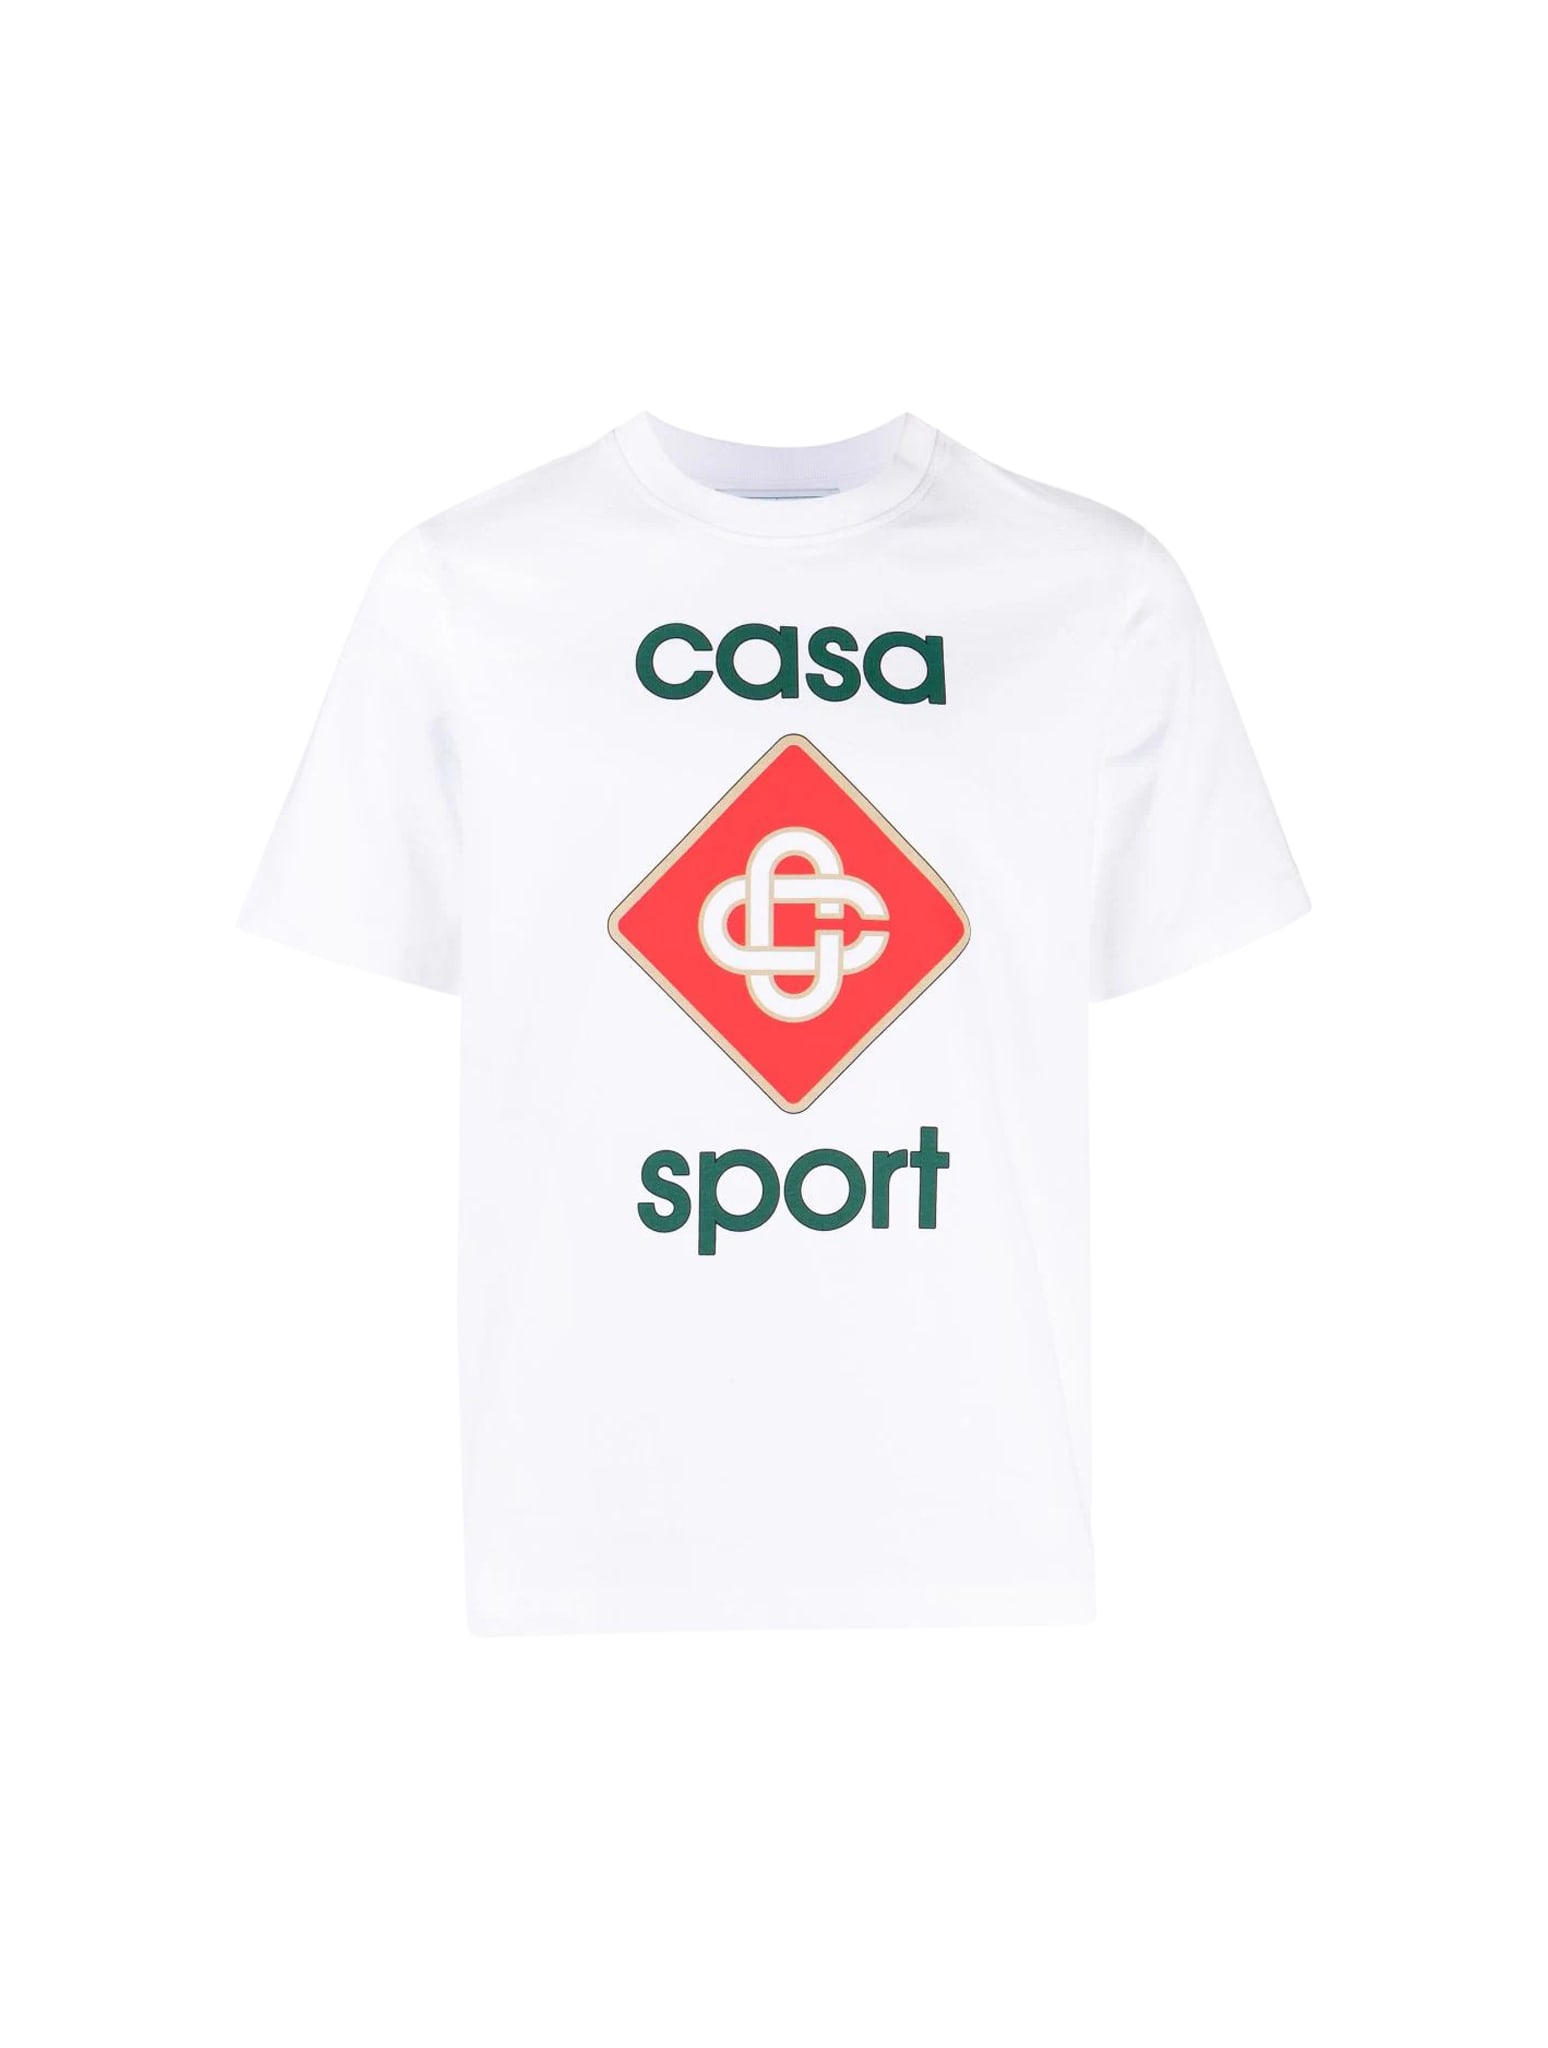 Casablanca Casa Sport Screen Printed Unisex T-shirt